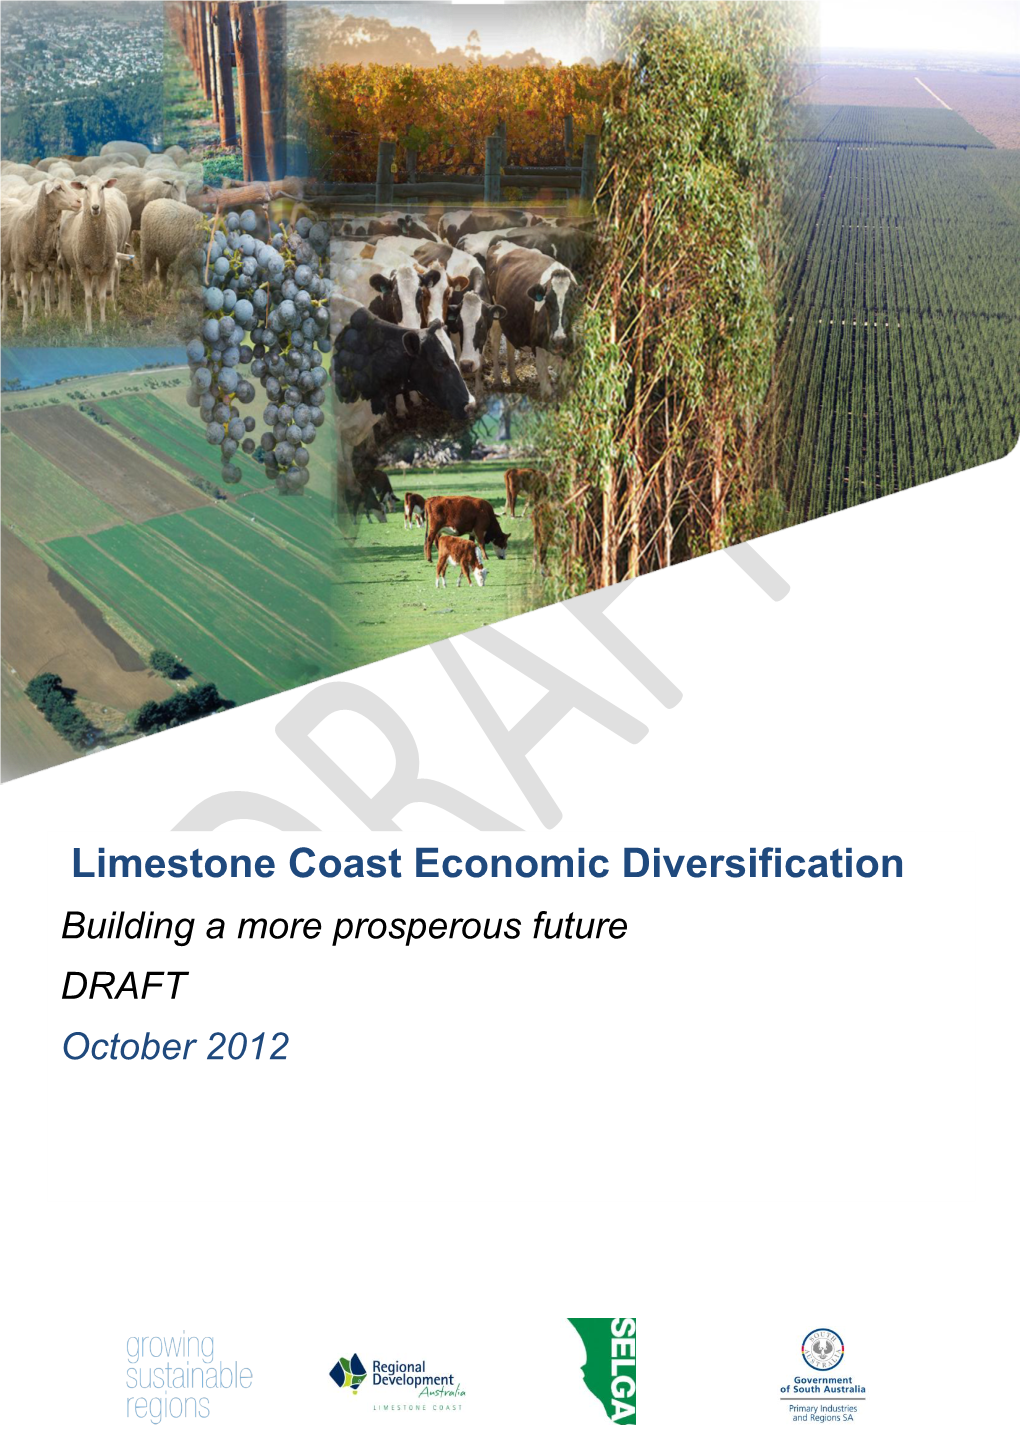 Limestone Coast Economic Diversification Report (2012)